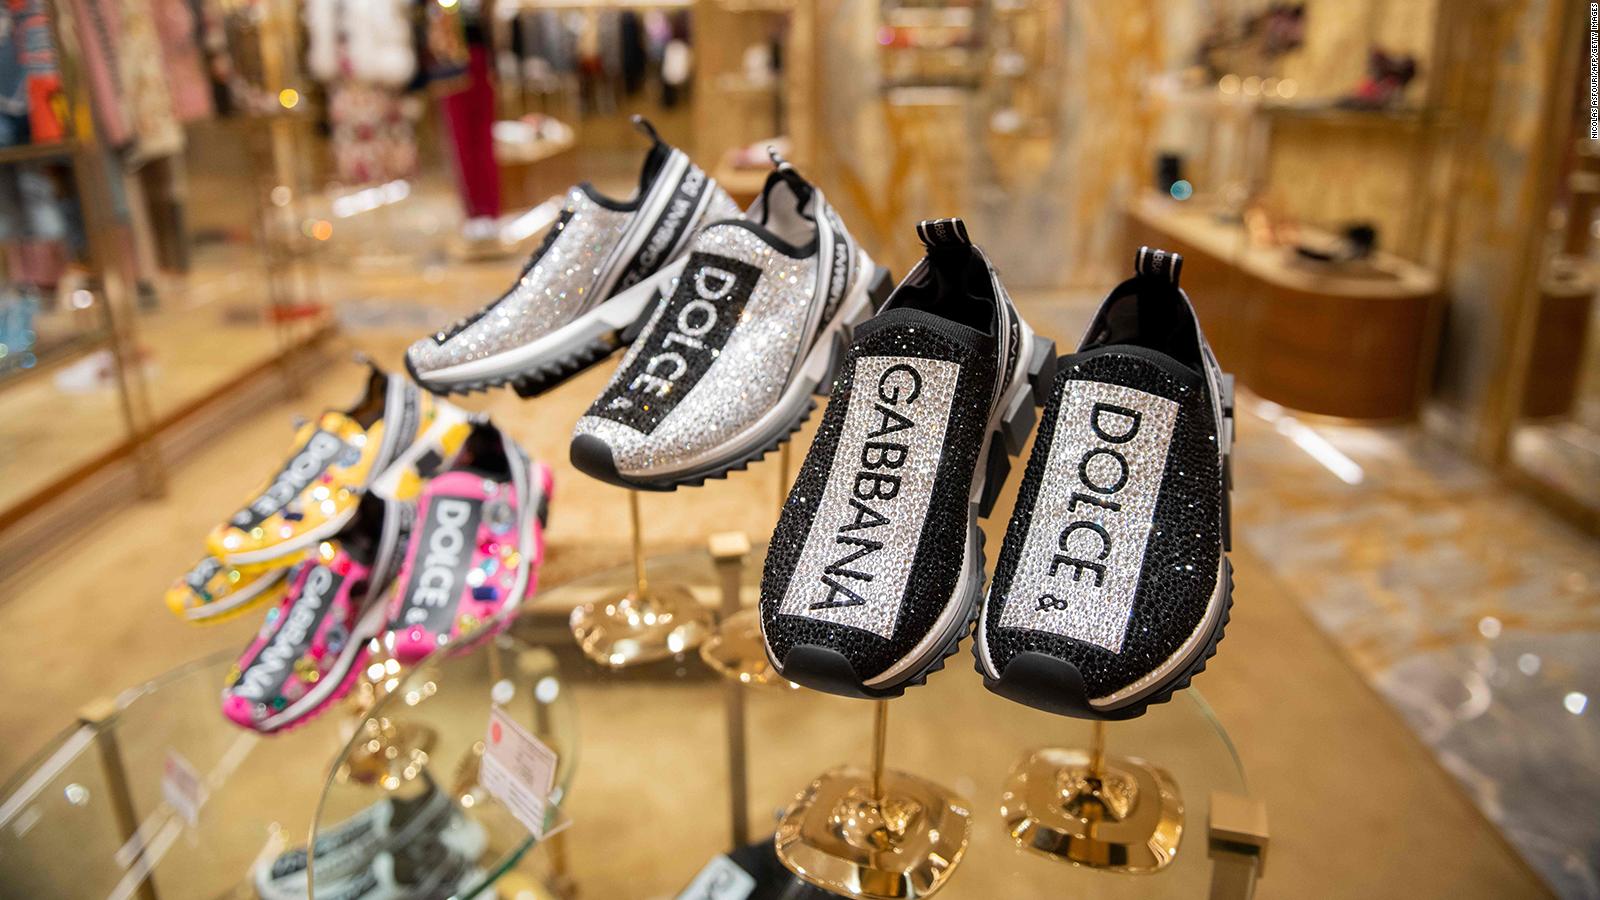 The Dolce & Gabbana Karen Mok backlash shows label is still struggling to win back China - CNN